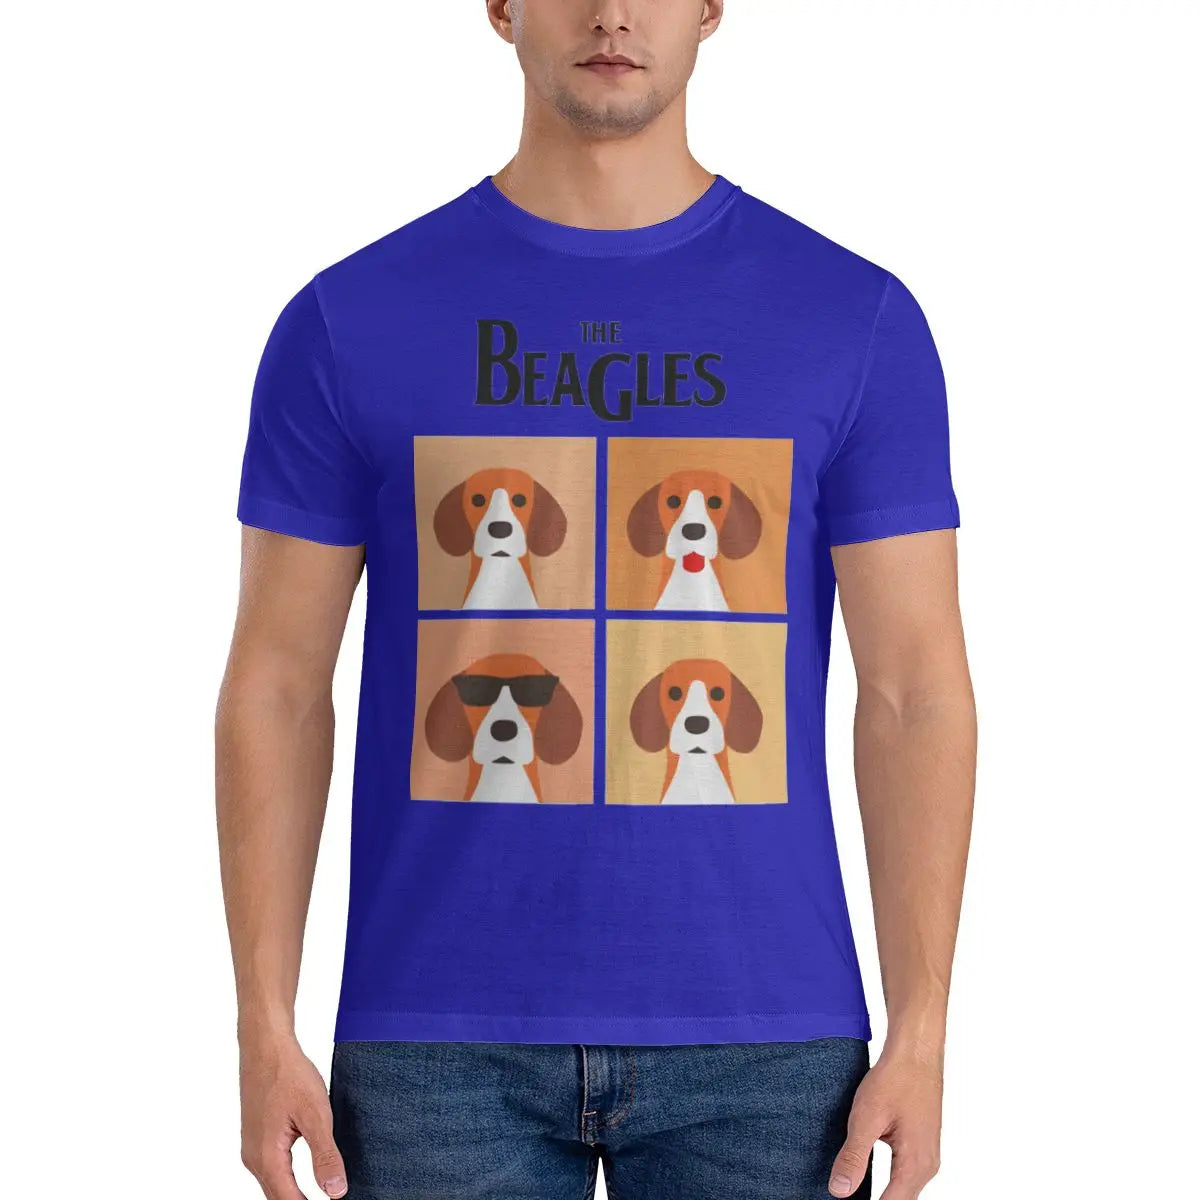 The Beagles Dog Band Beetles Novelty 100% Cotton Tees Crewneck Short Sleeve T Shirt 5XL - Premium t-shirt from Lizard Vigilante - Just $23.99! Shop now at Lizard Vigilante